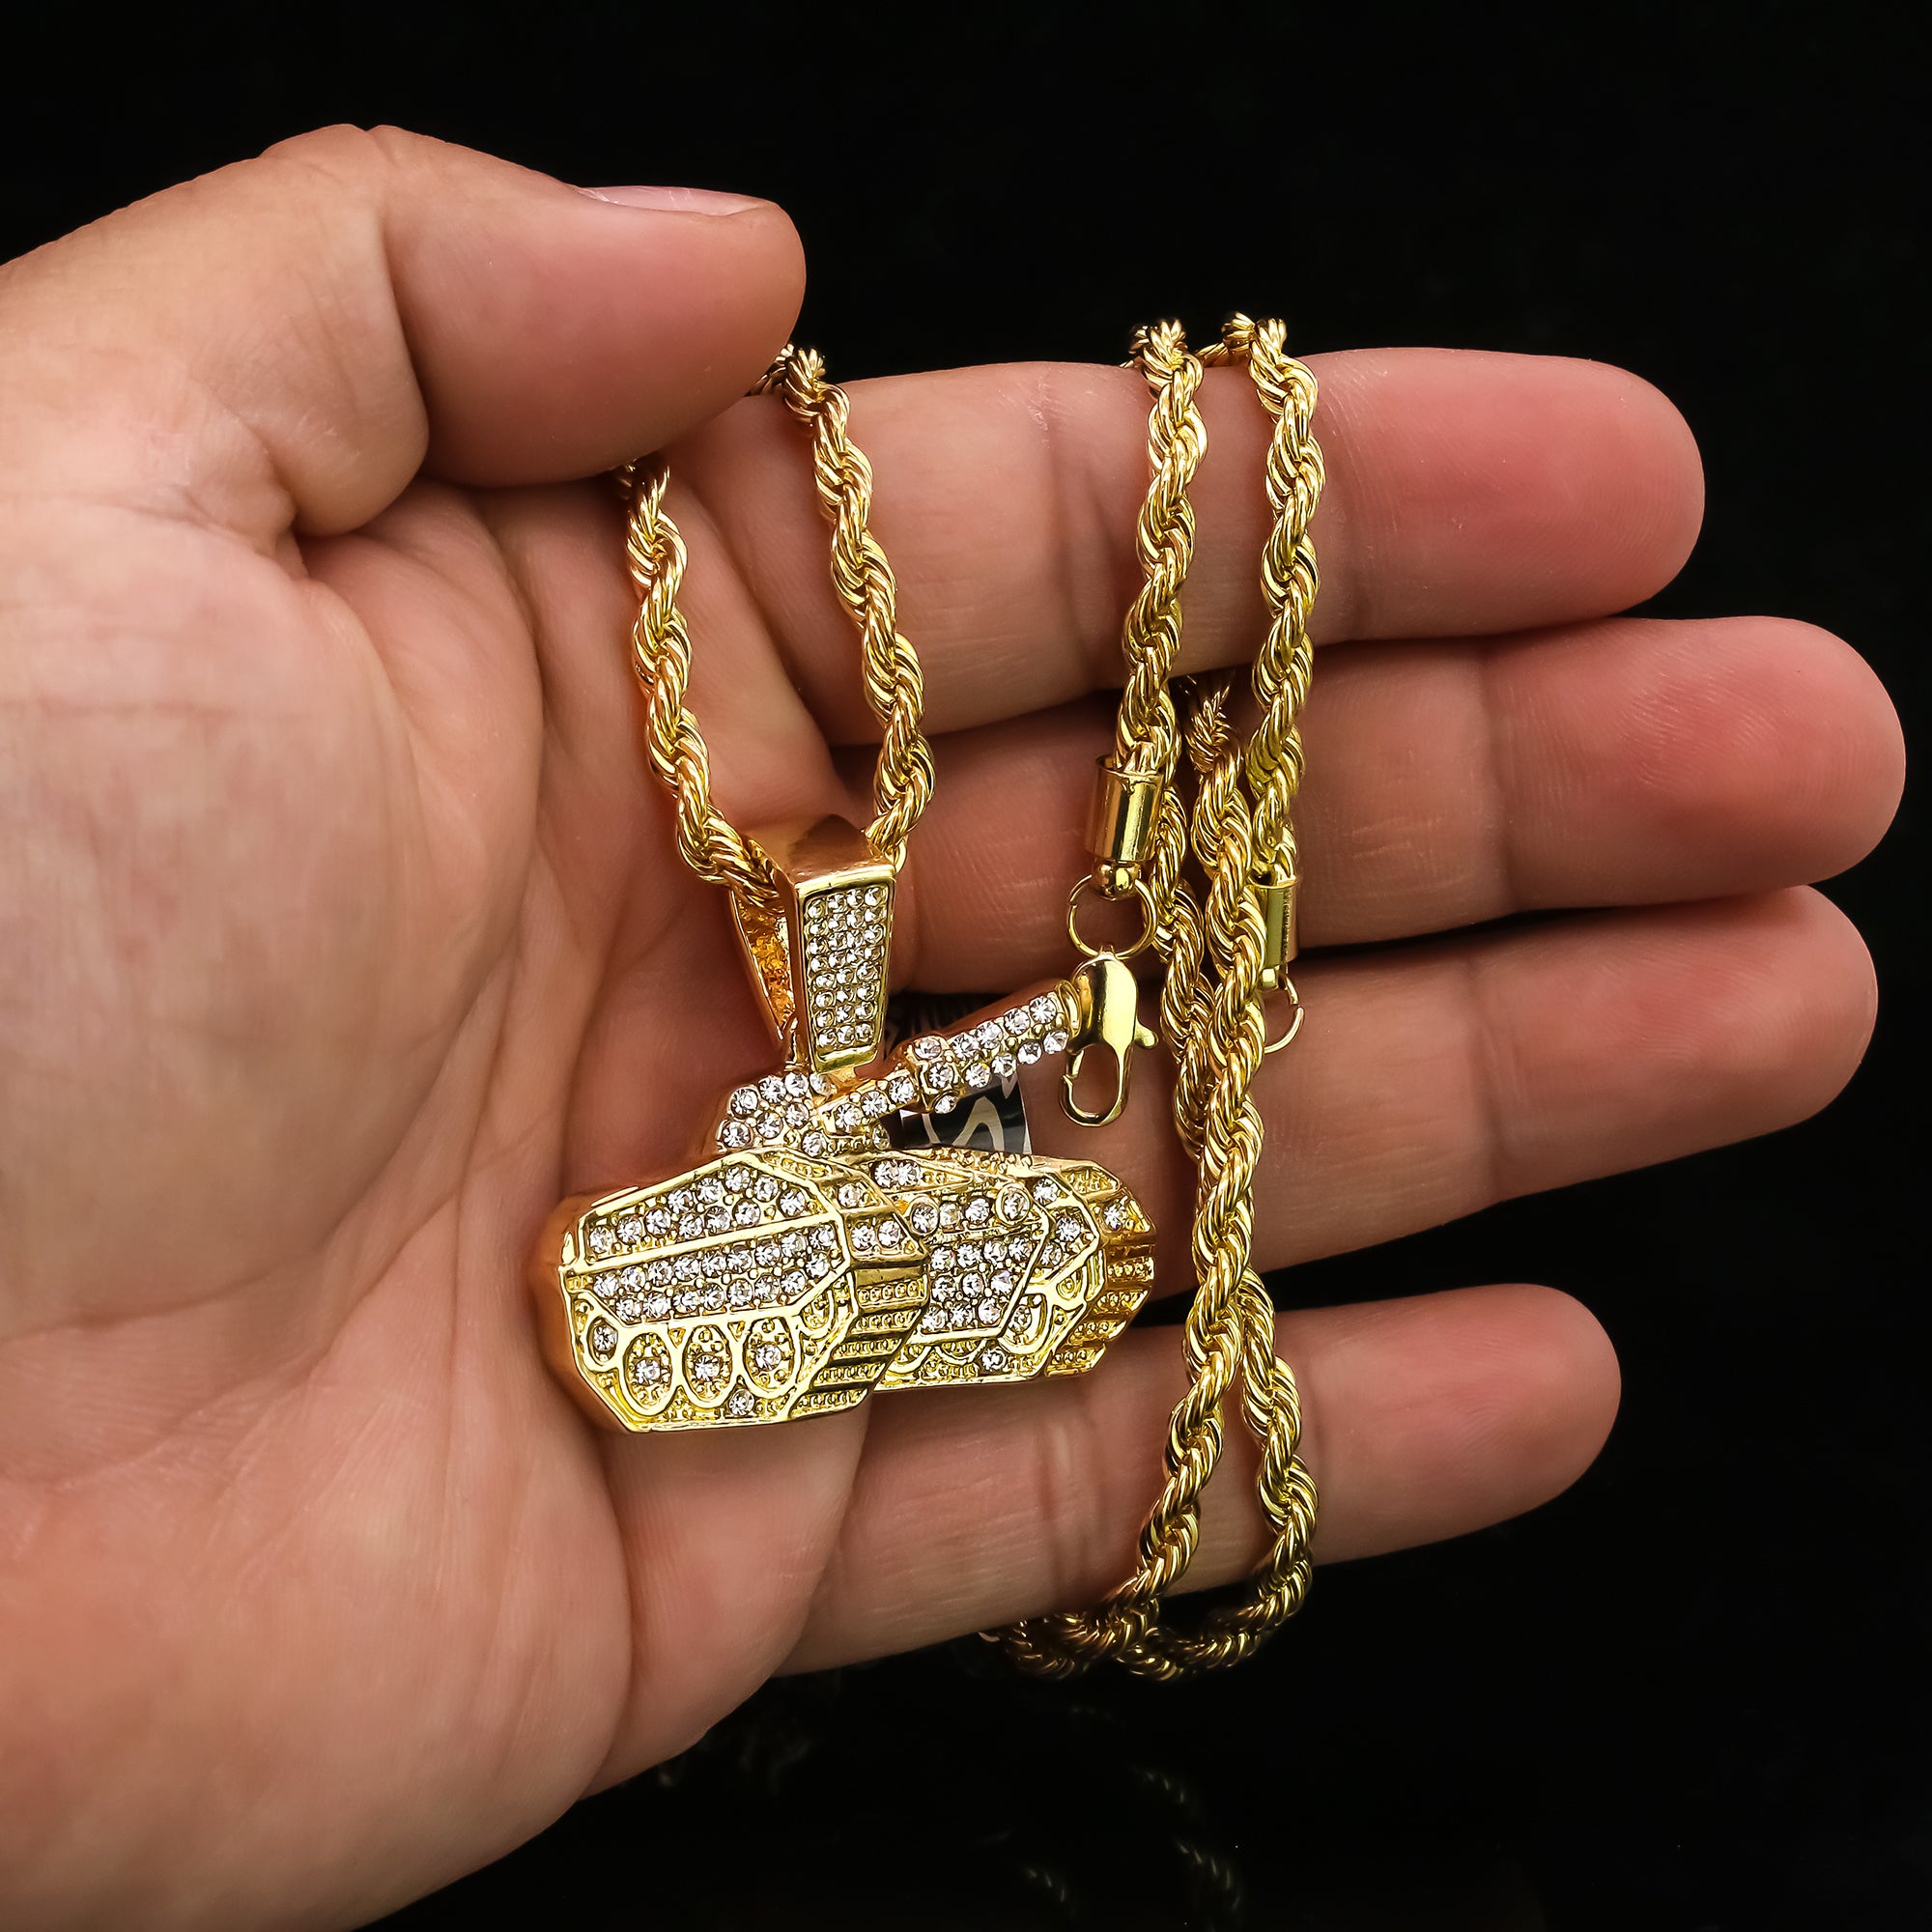 Exquisite Tank Pendant Rope Necklace Chain Men's Hip Hop 18k Cz Jewelry